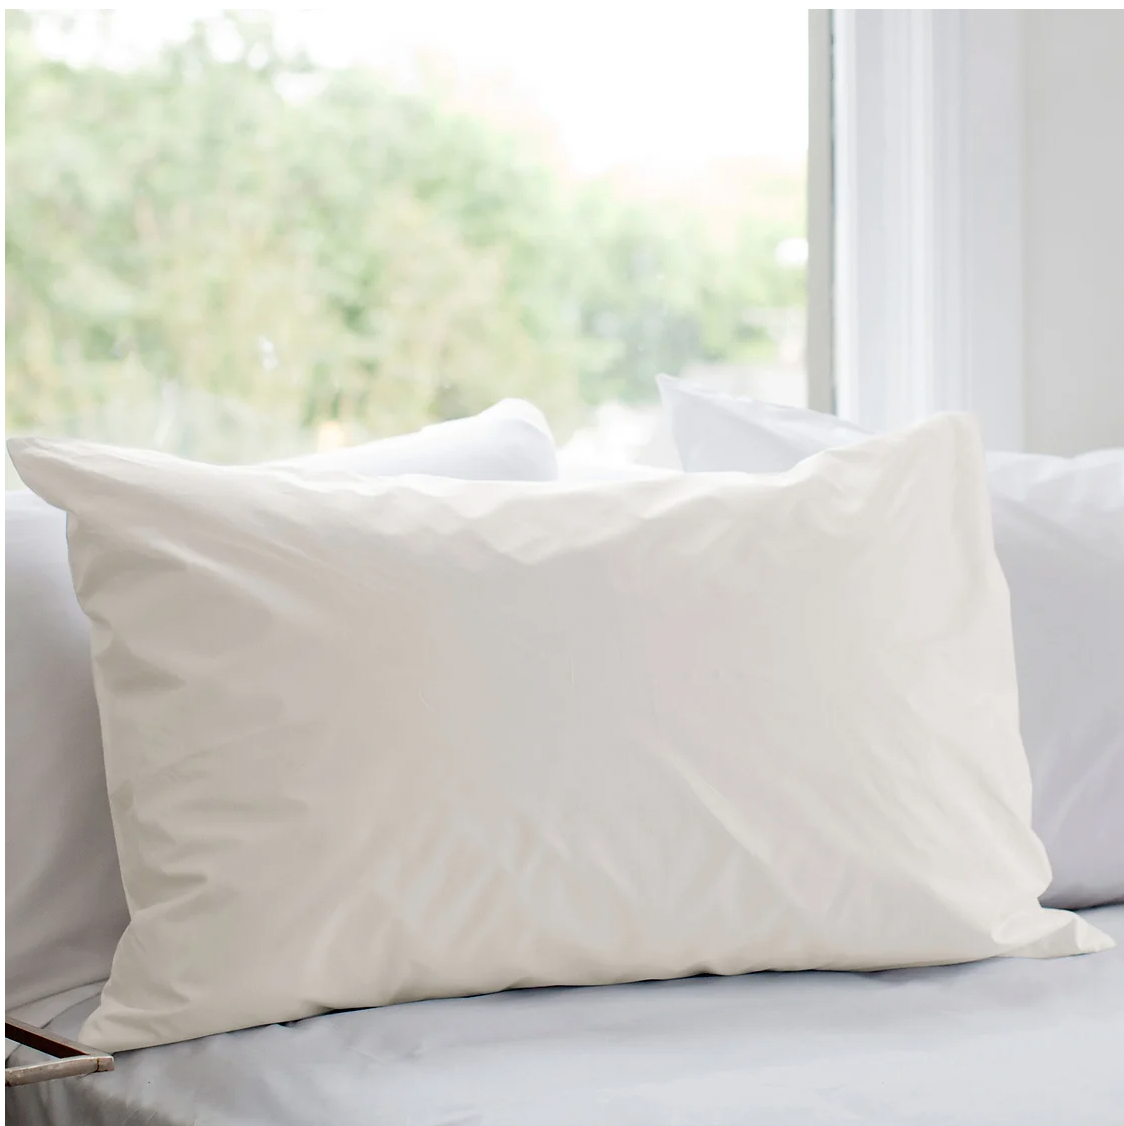 Certified Organic Pillow Protector